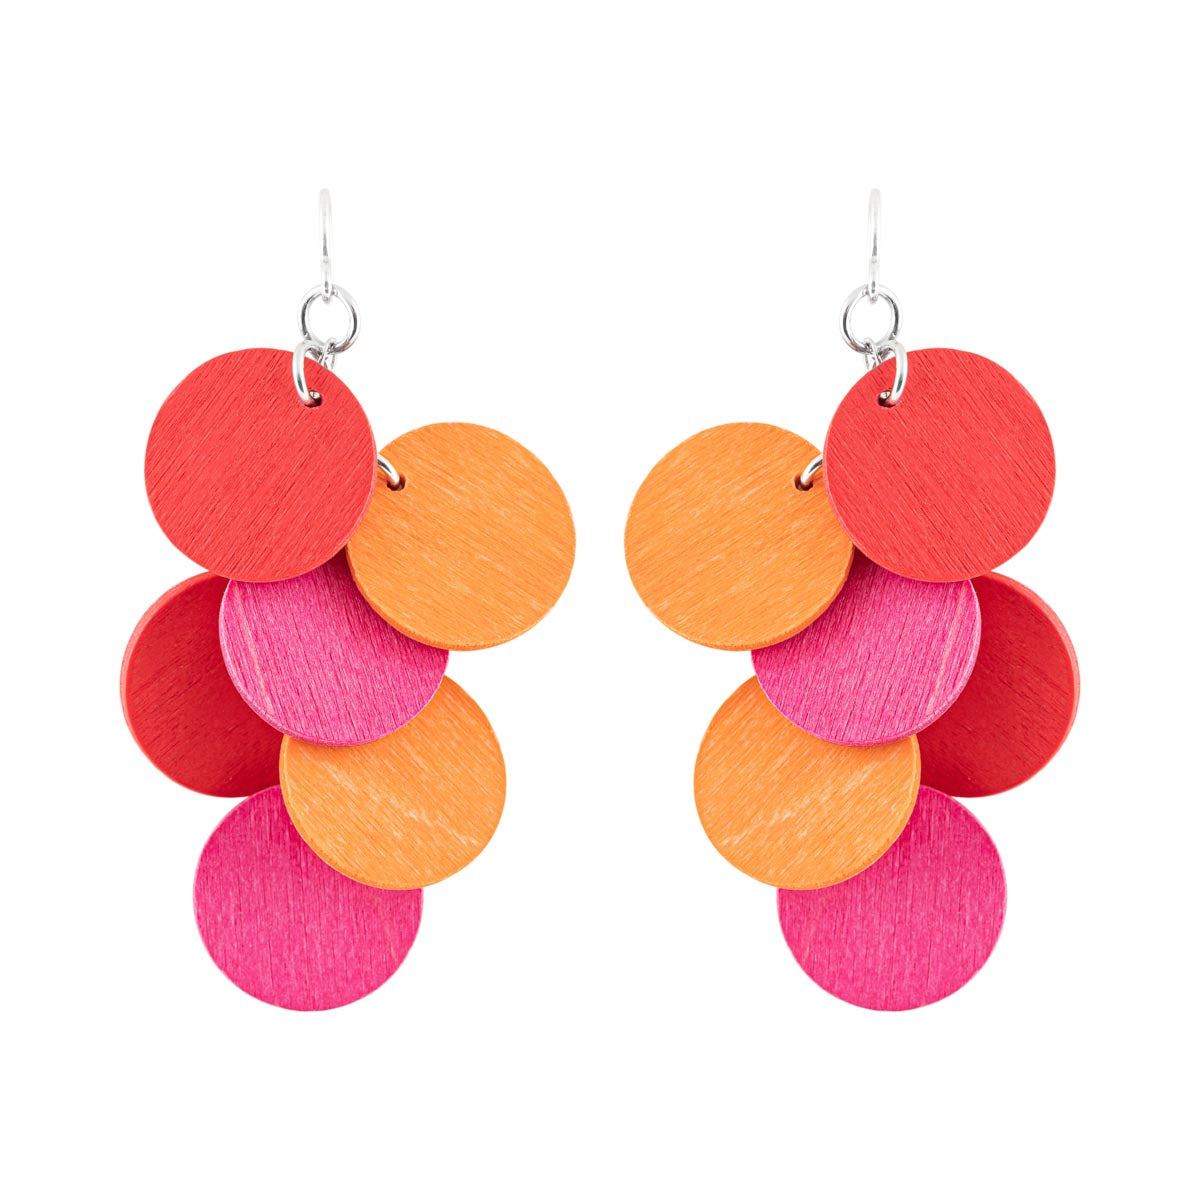 Juolukka earrings, shades of red